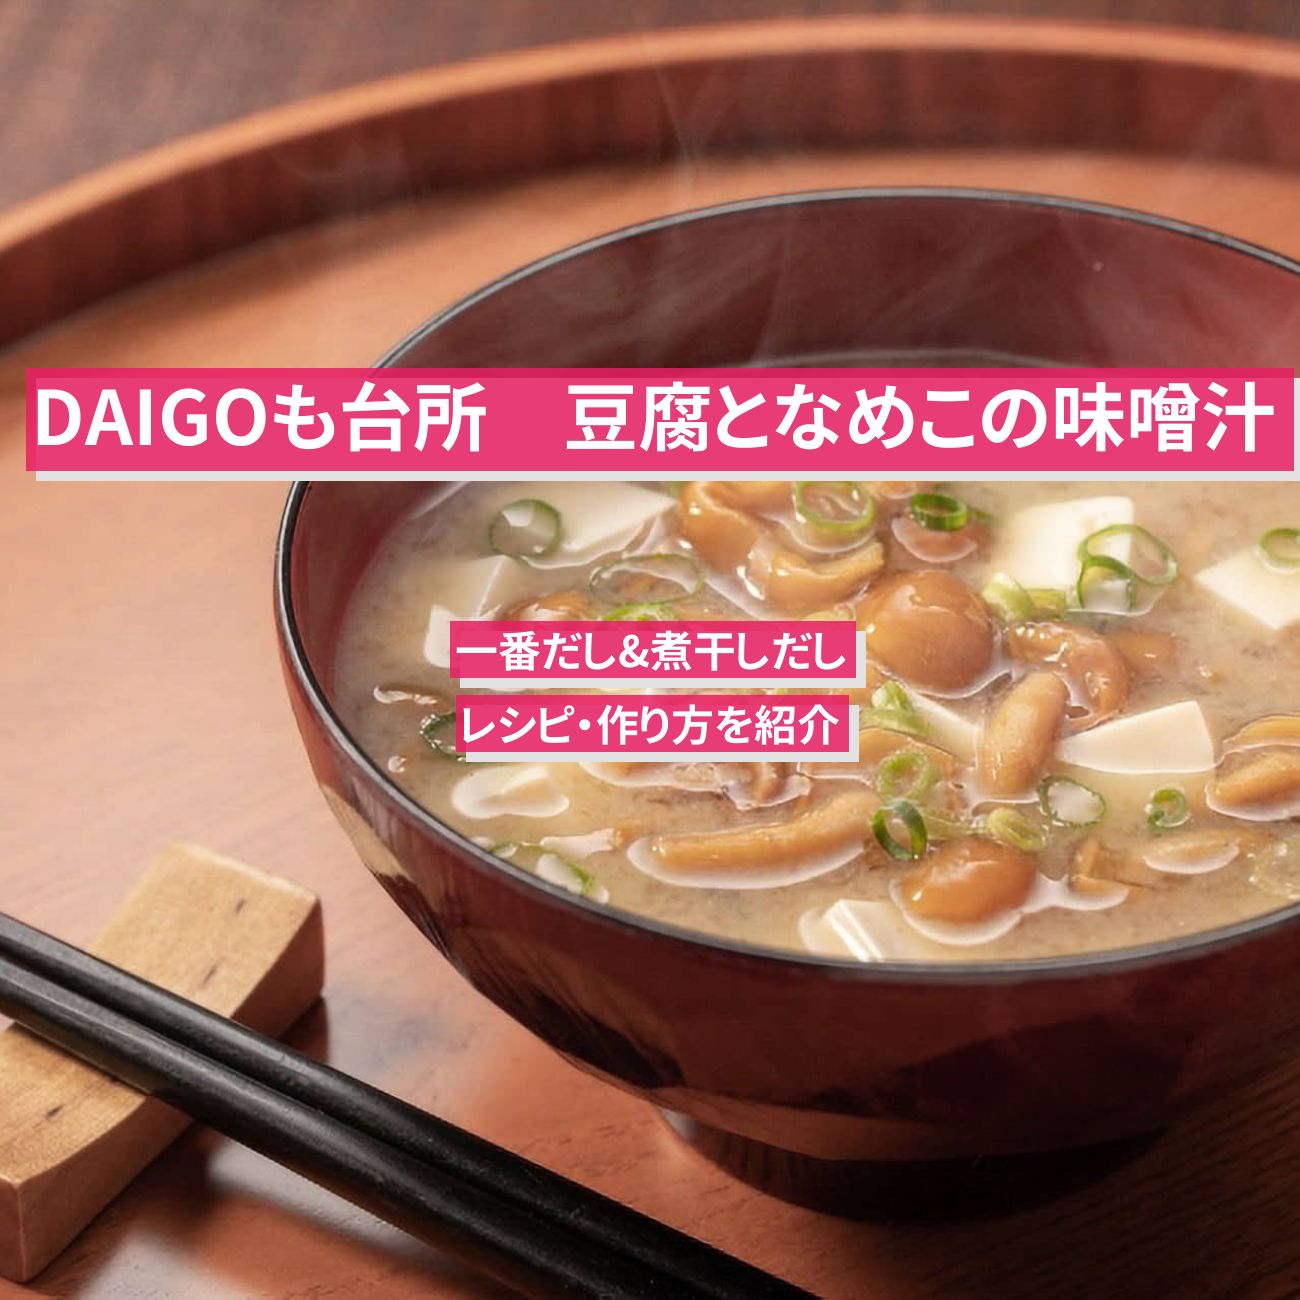 【DAIGOも台所】一番だし・煮干し出汁『豆腐となめこの味噌汁』のレシピ・作り方を紹介〔ダイゴも台所〕